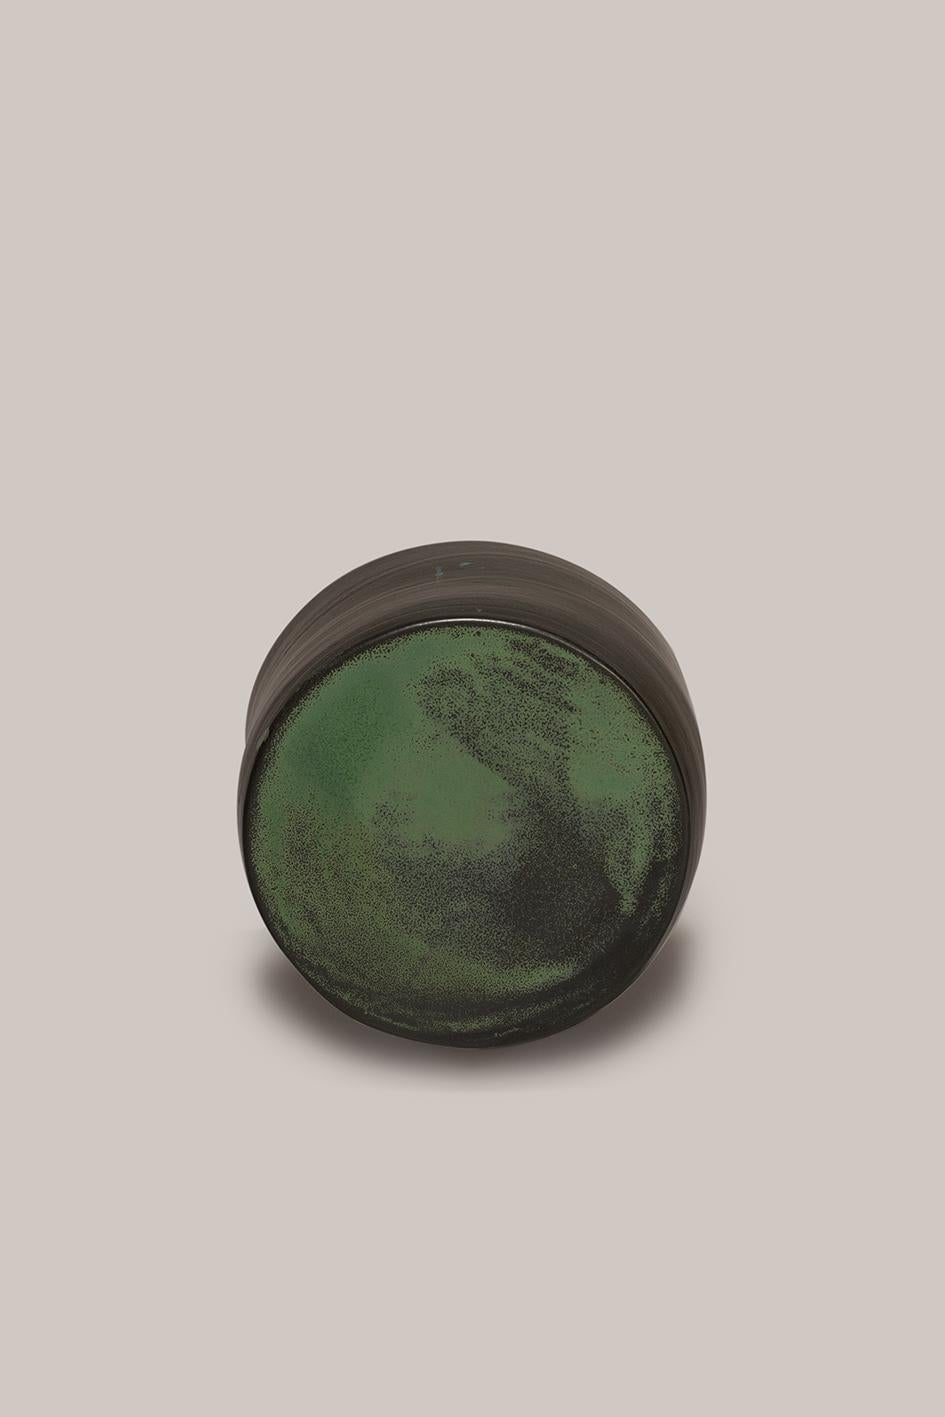 Polished Contemporary Ceramic Side Table Column Stool Black Dark Green Glazed Stoneware